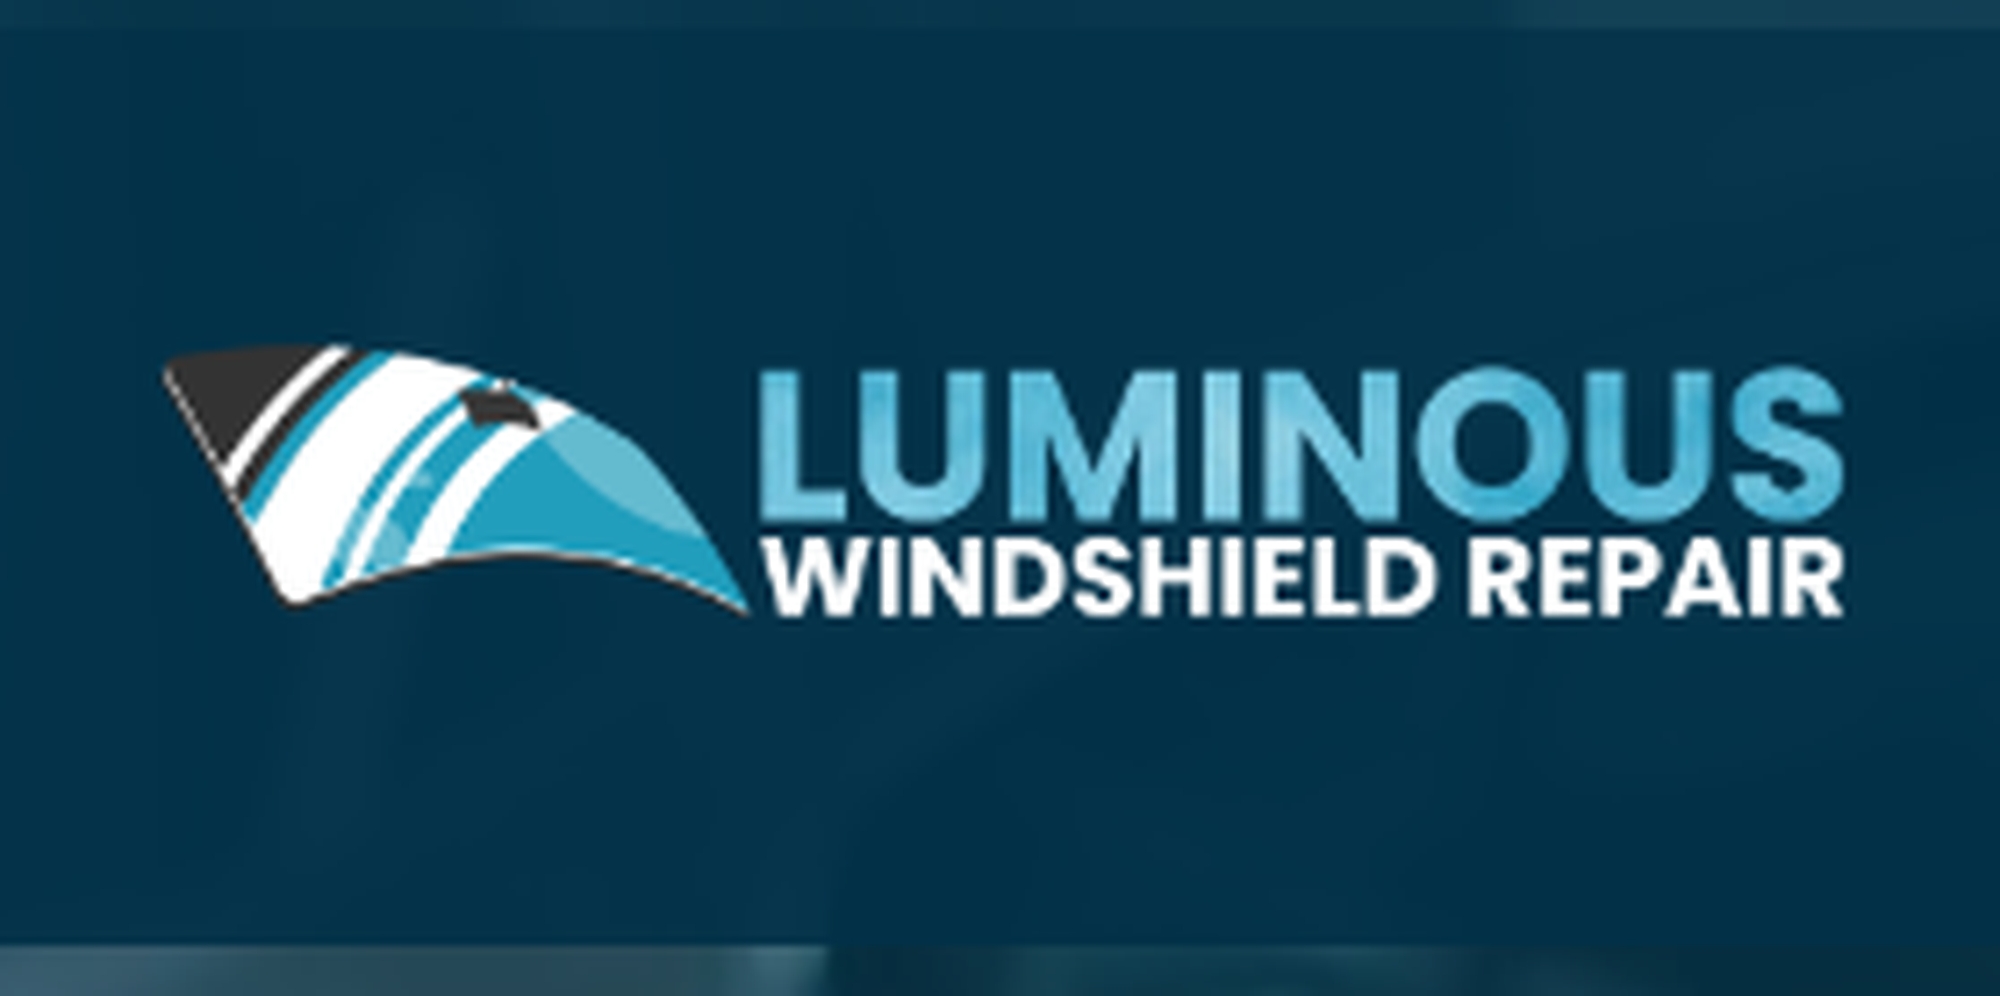  Luminous Windshield Repair